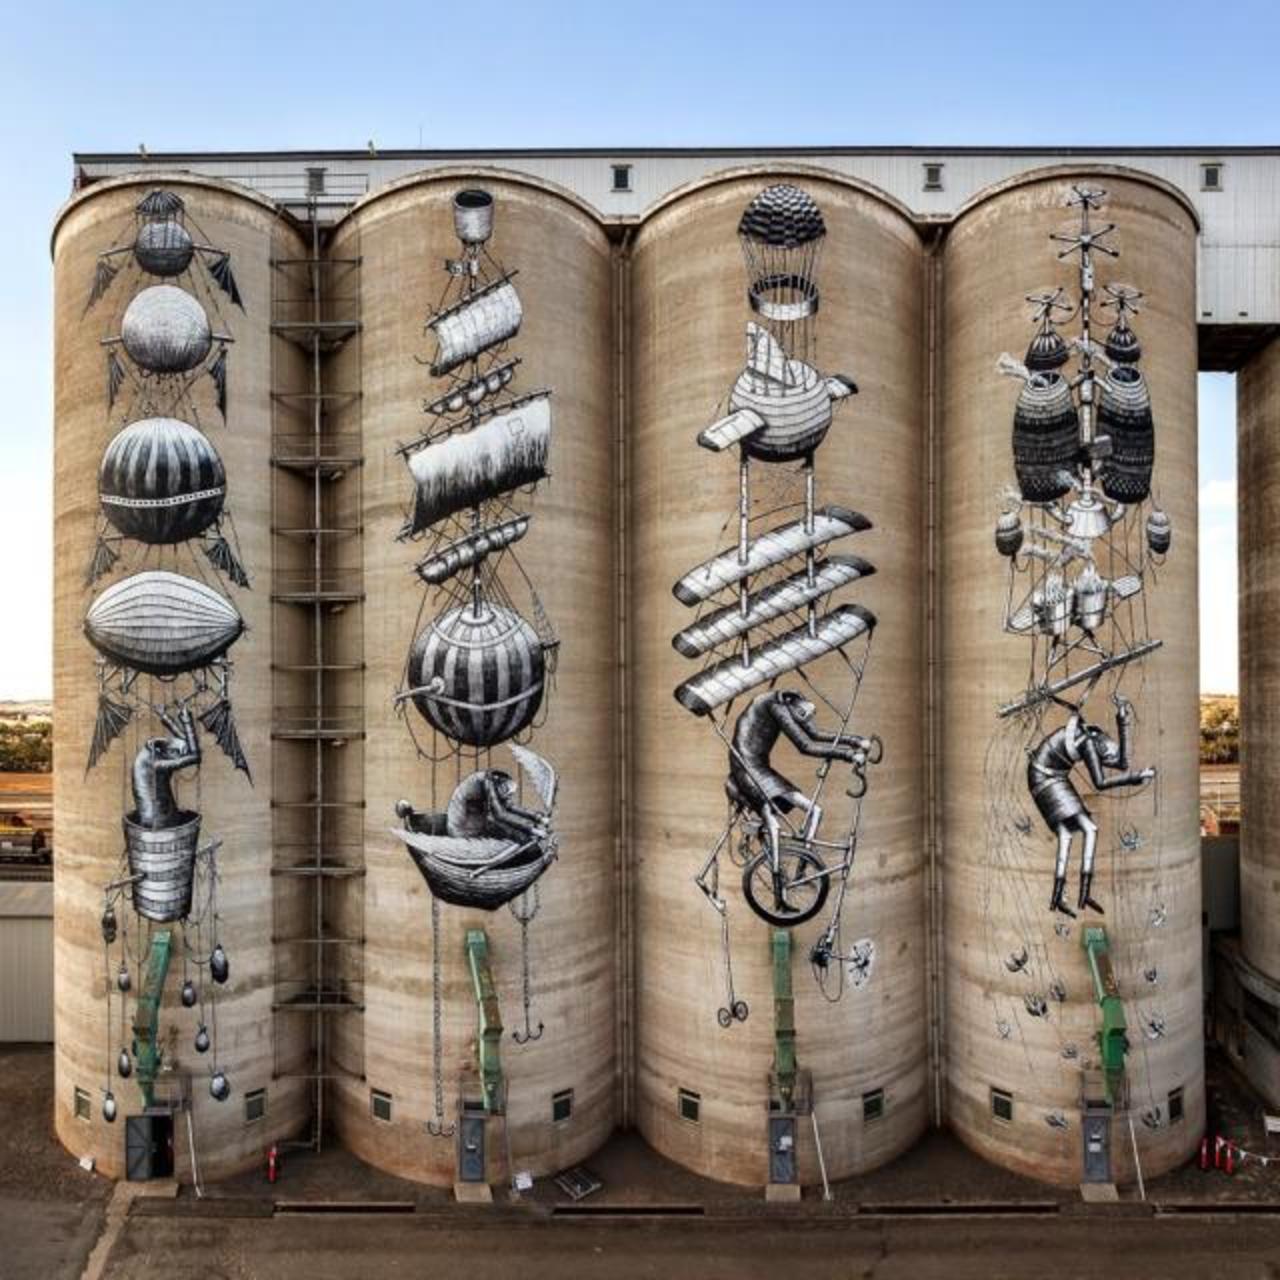 RT @streetartscout: Phlegm – Perth, Australia http://designsalp.com/2015/05/04/the-10-most-popular-street-art-pieces-of-april-2015 … … via @designsalp #streetart #perth #australia #graffiti #mural http://t.co/yneTmbunWs